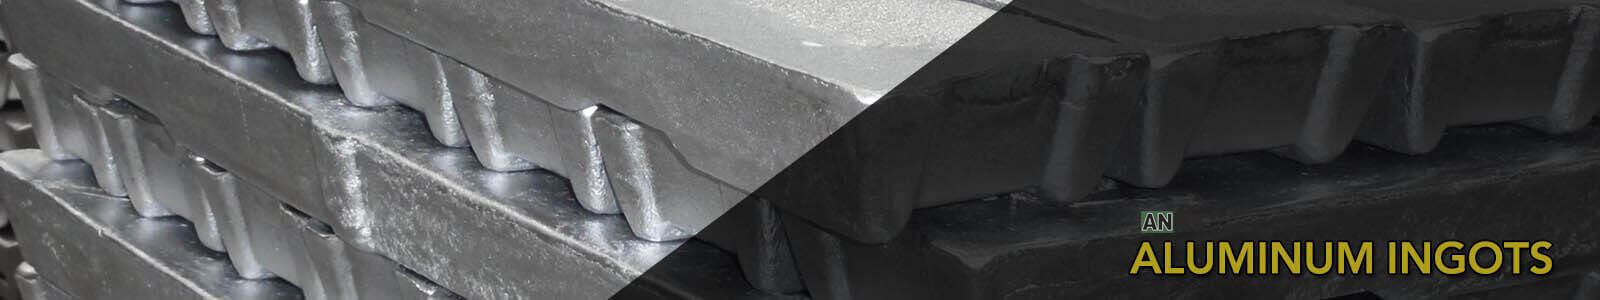 aluminum ingots- anmk steel